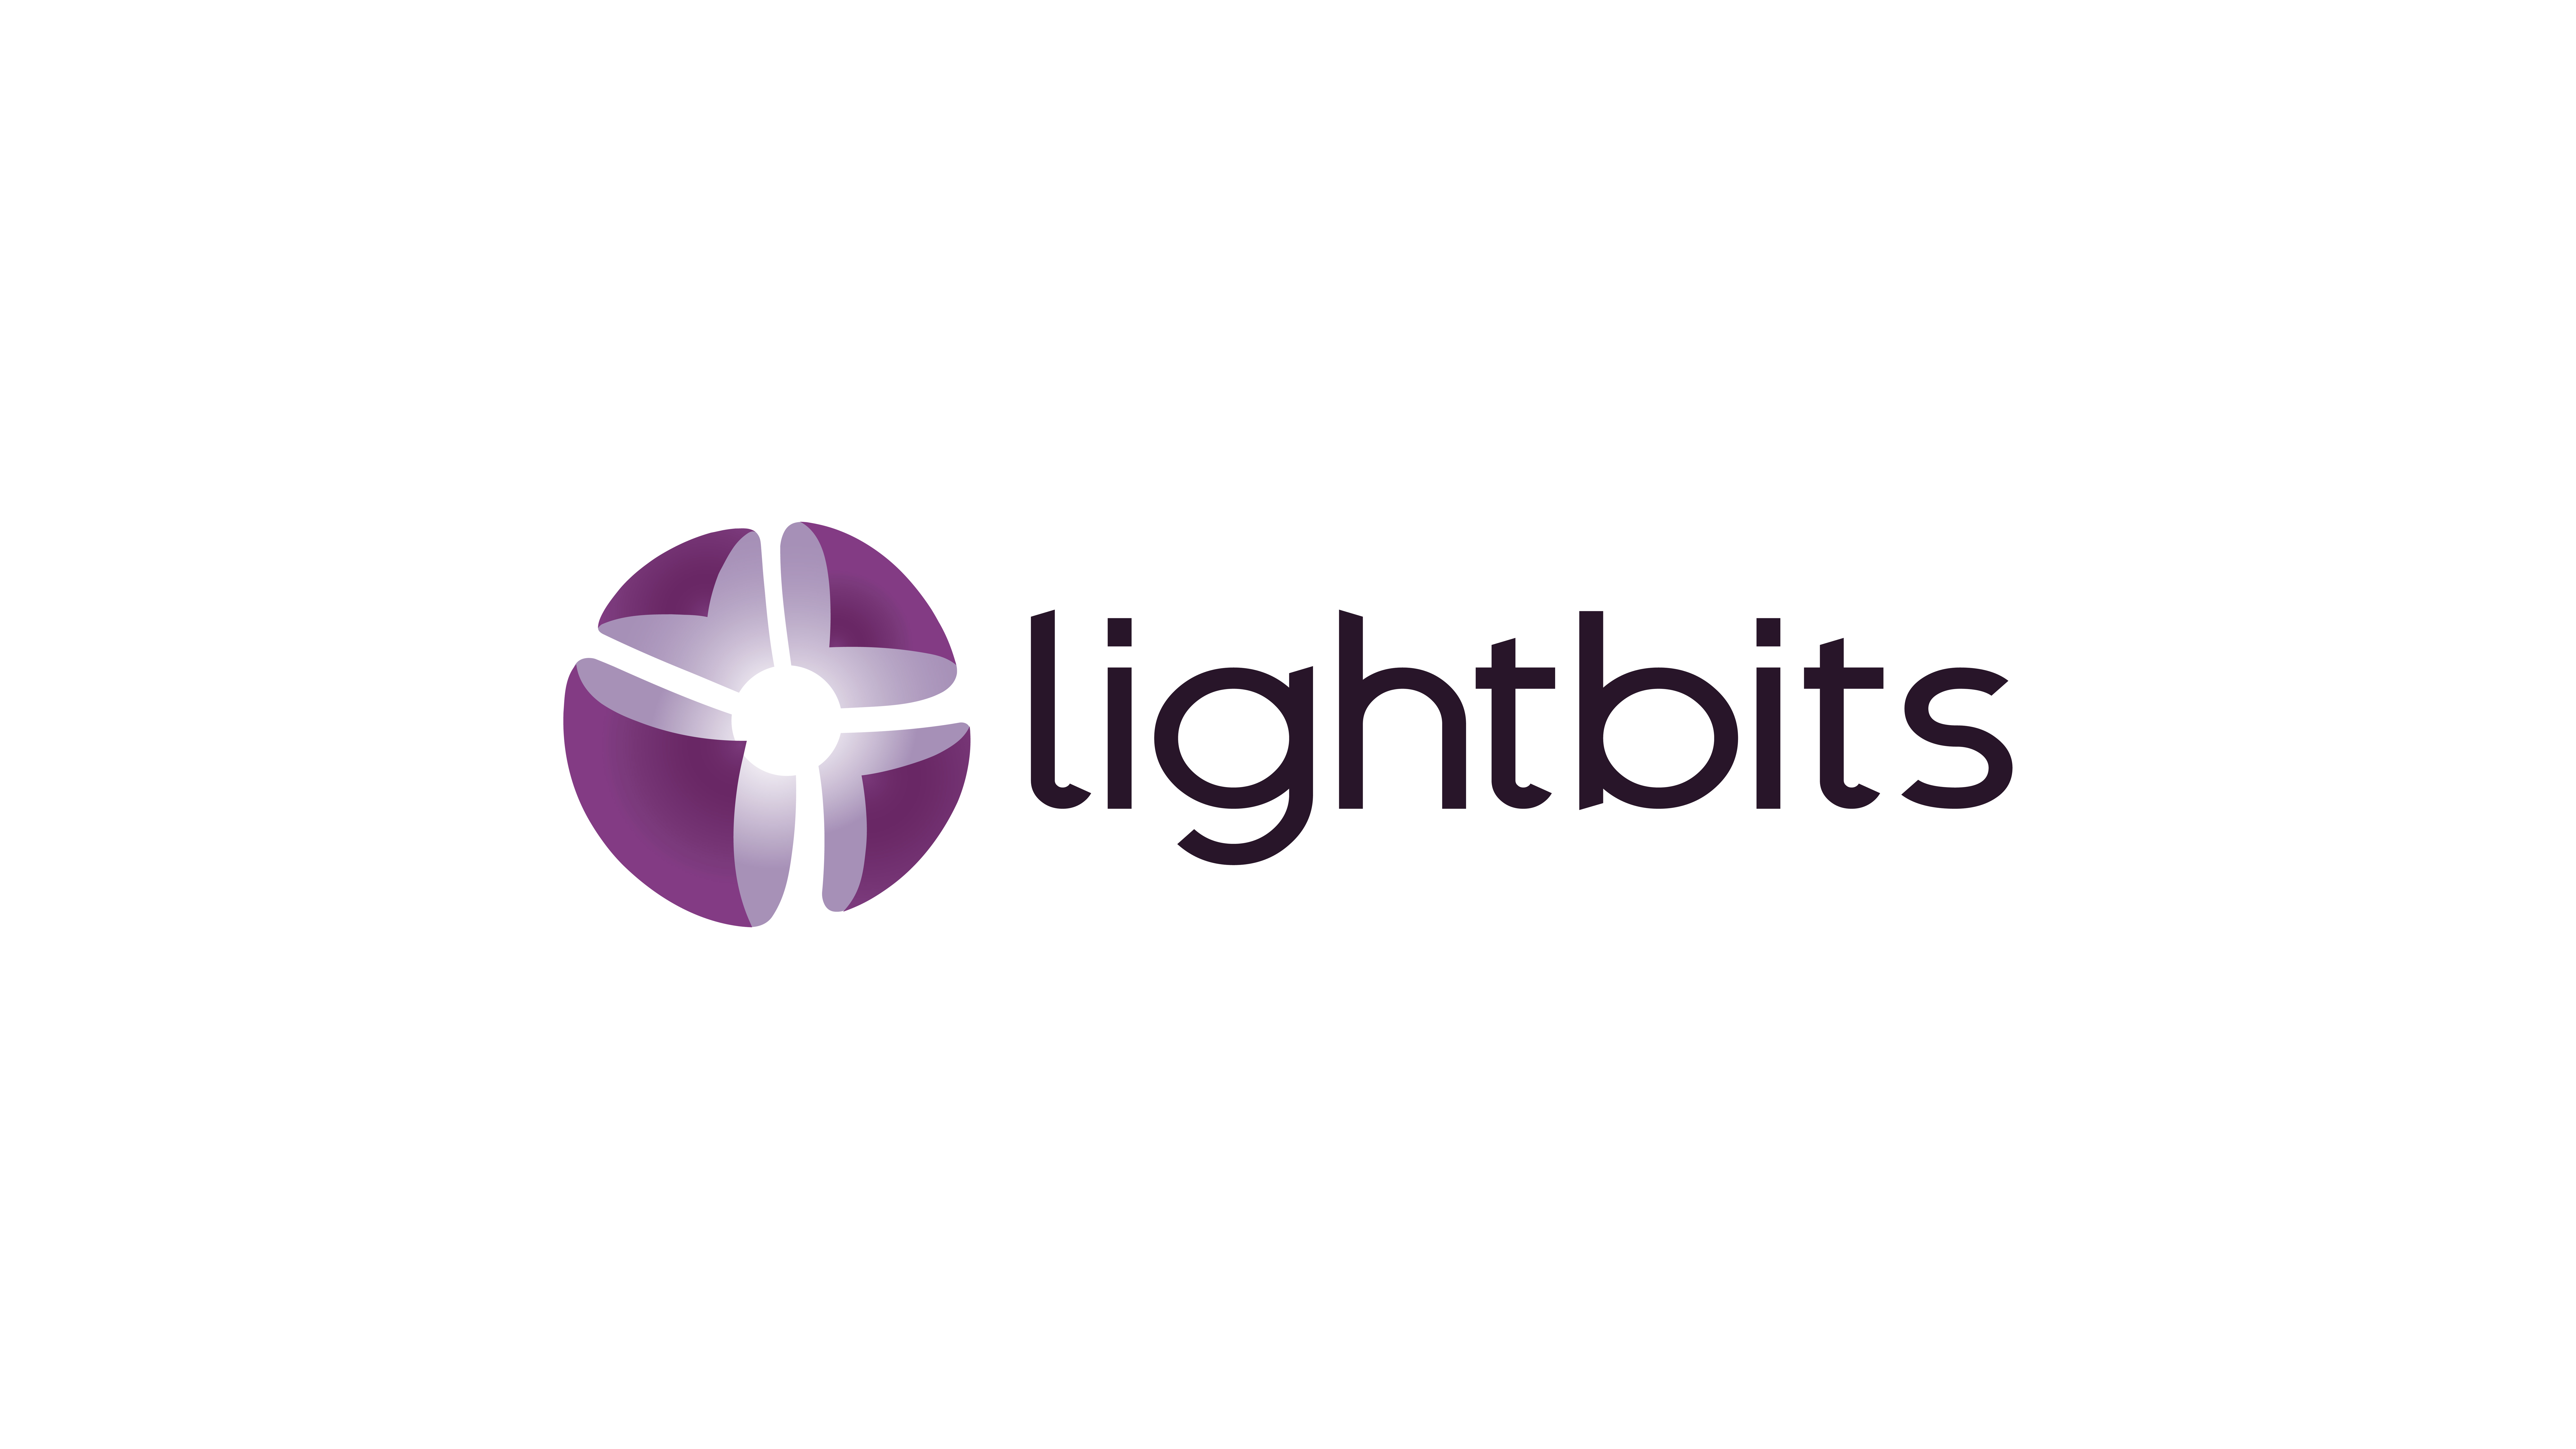 Lightbits logo R8- ALL (RGB option)_Lightbits logo big on light background.jpg